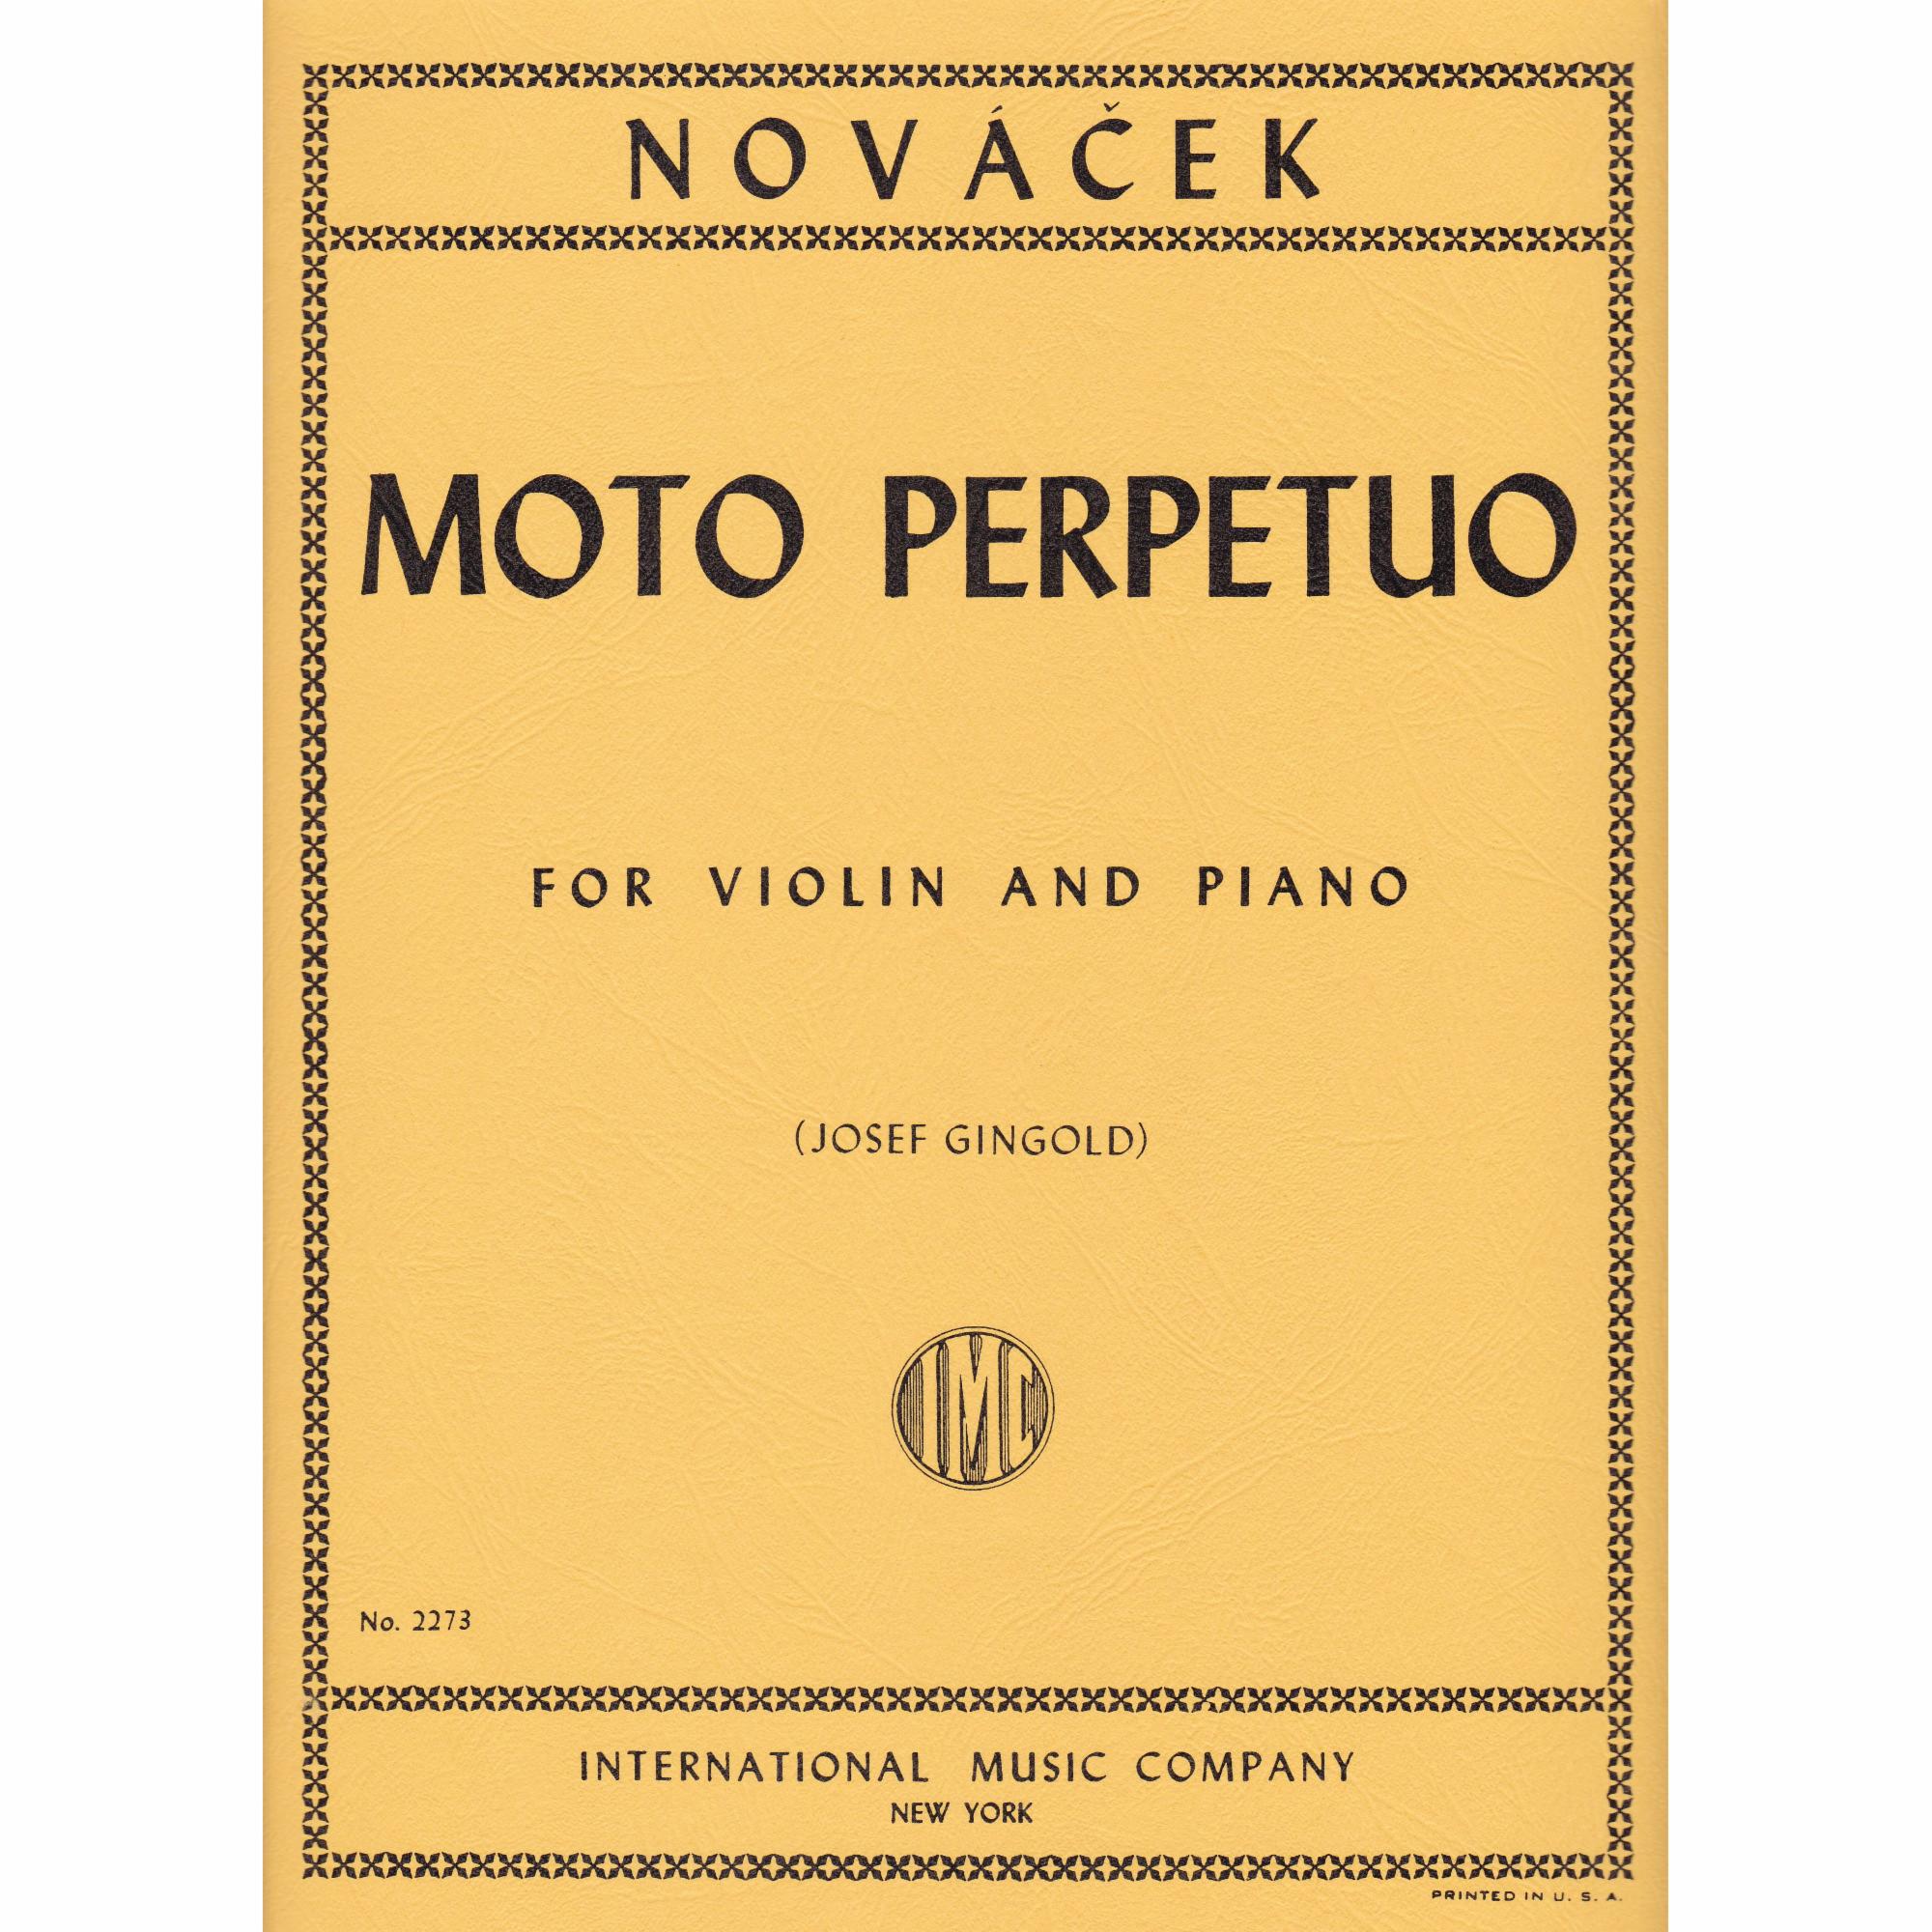 Novacek -- Moto Perpetuo for Violin and Piano